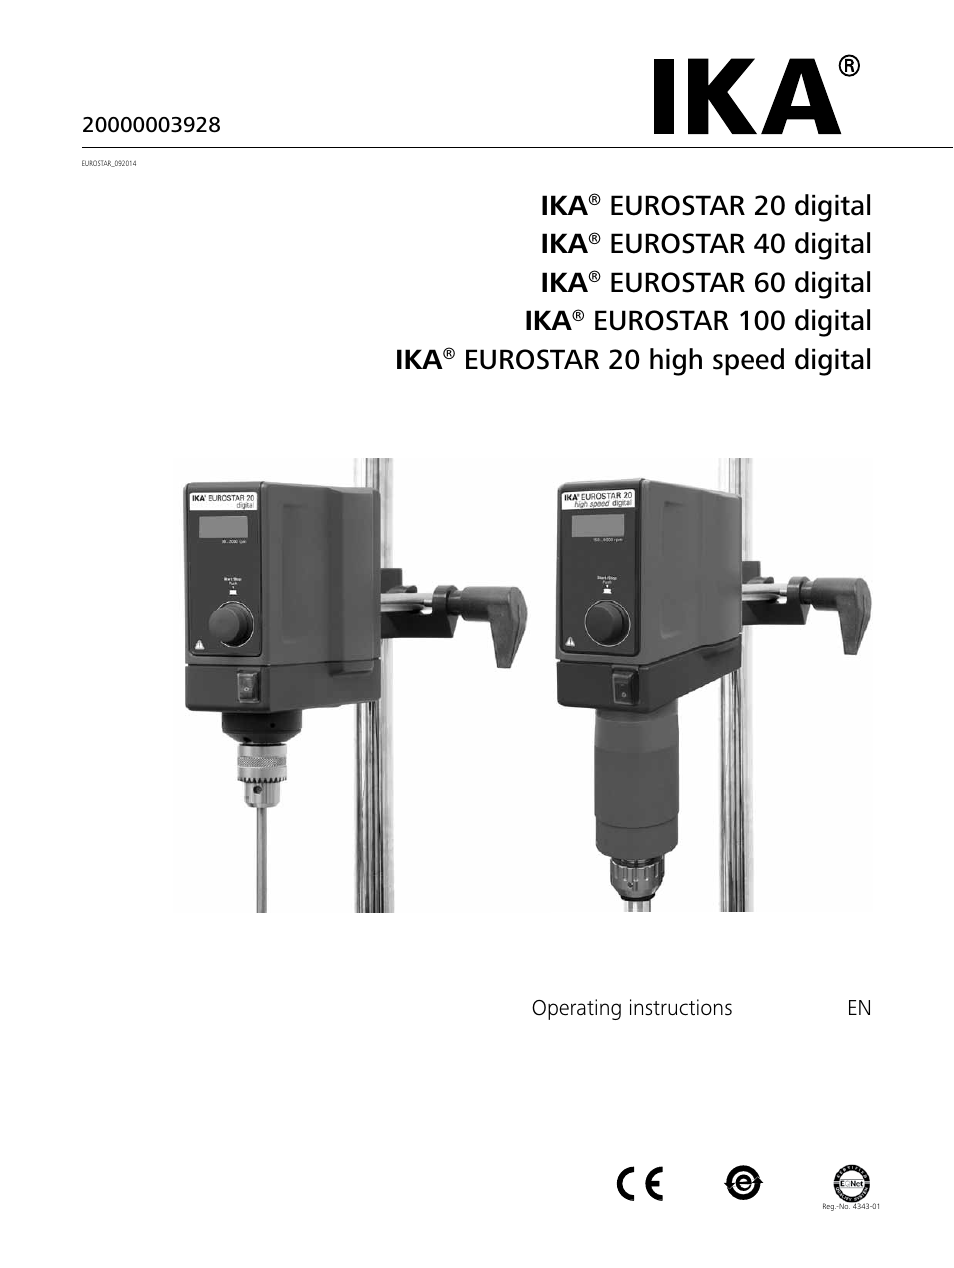 IKA EUROSTAR 100 digital User Manual | 13 pages